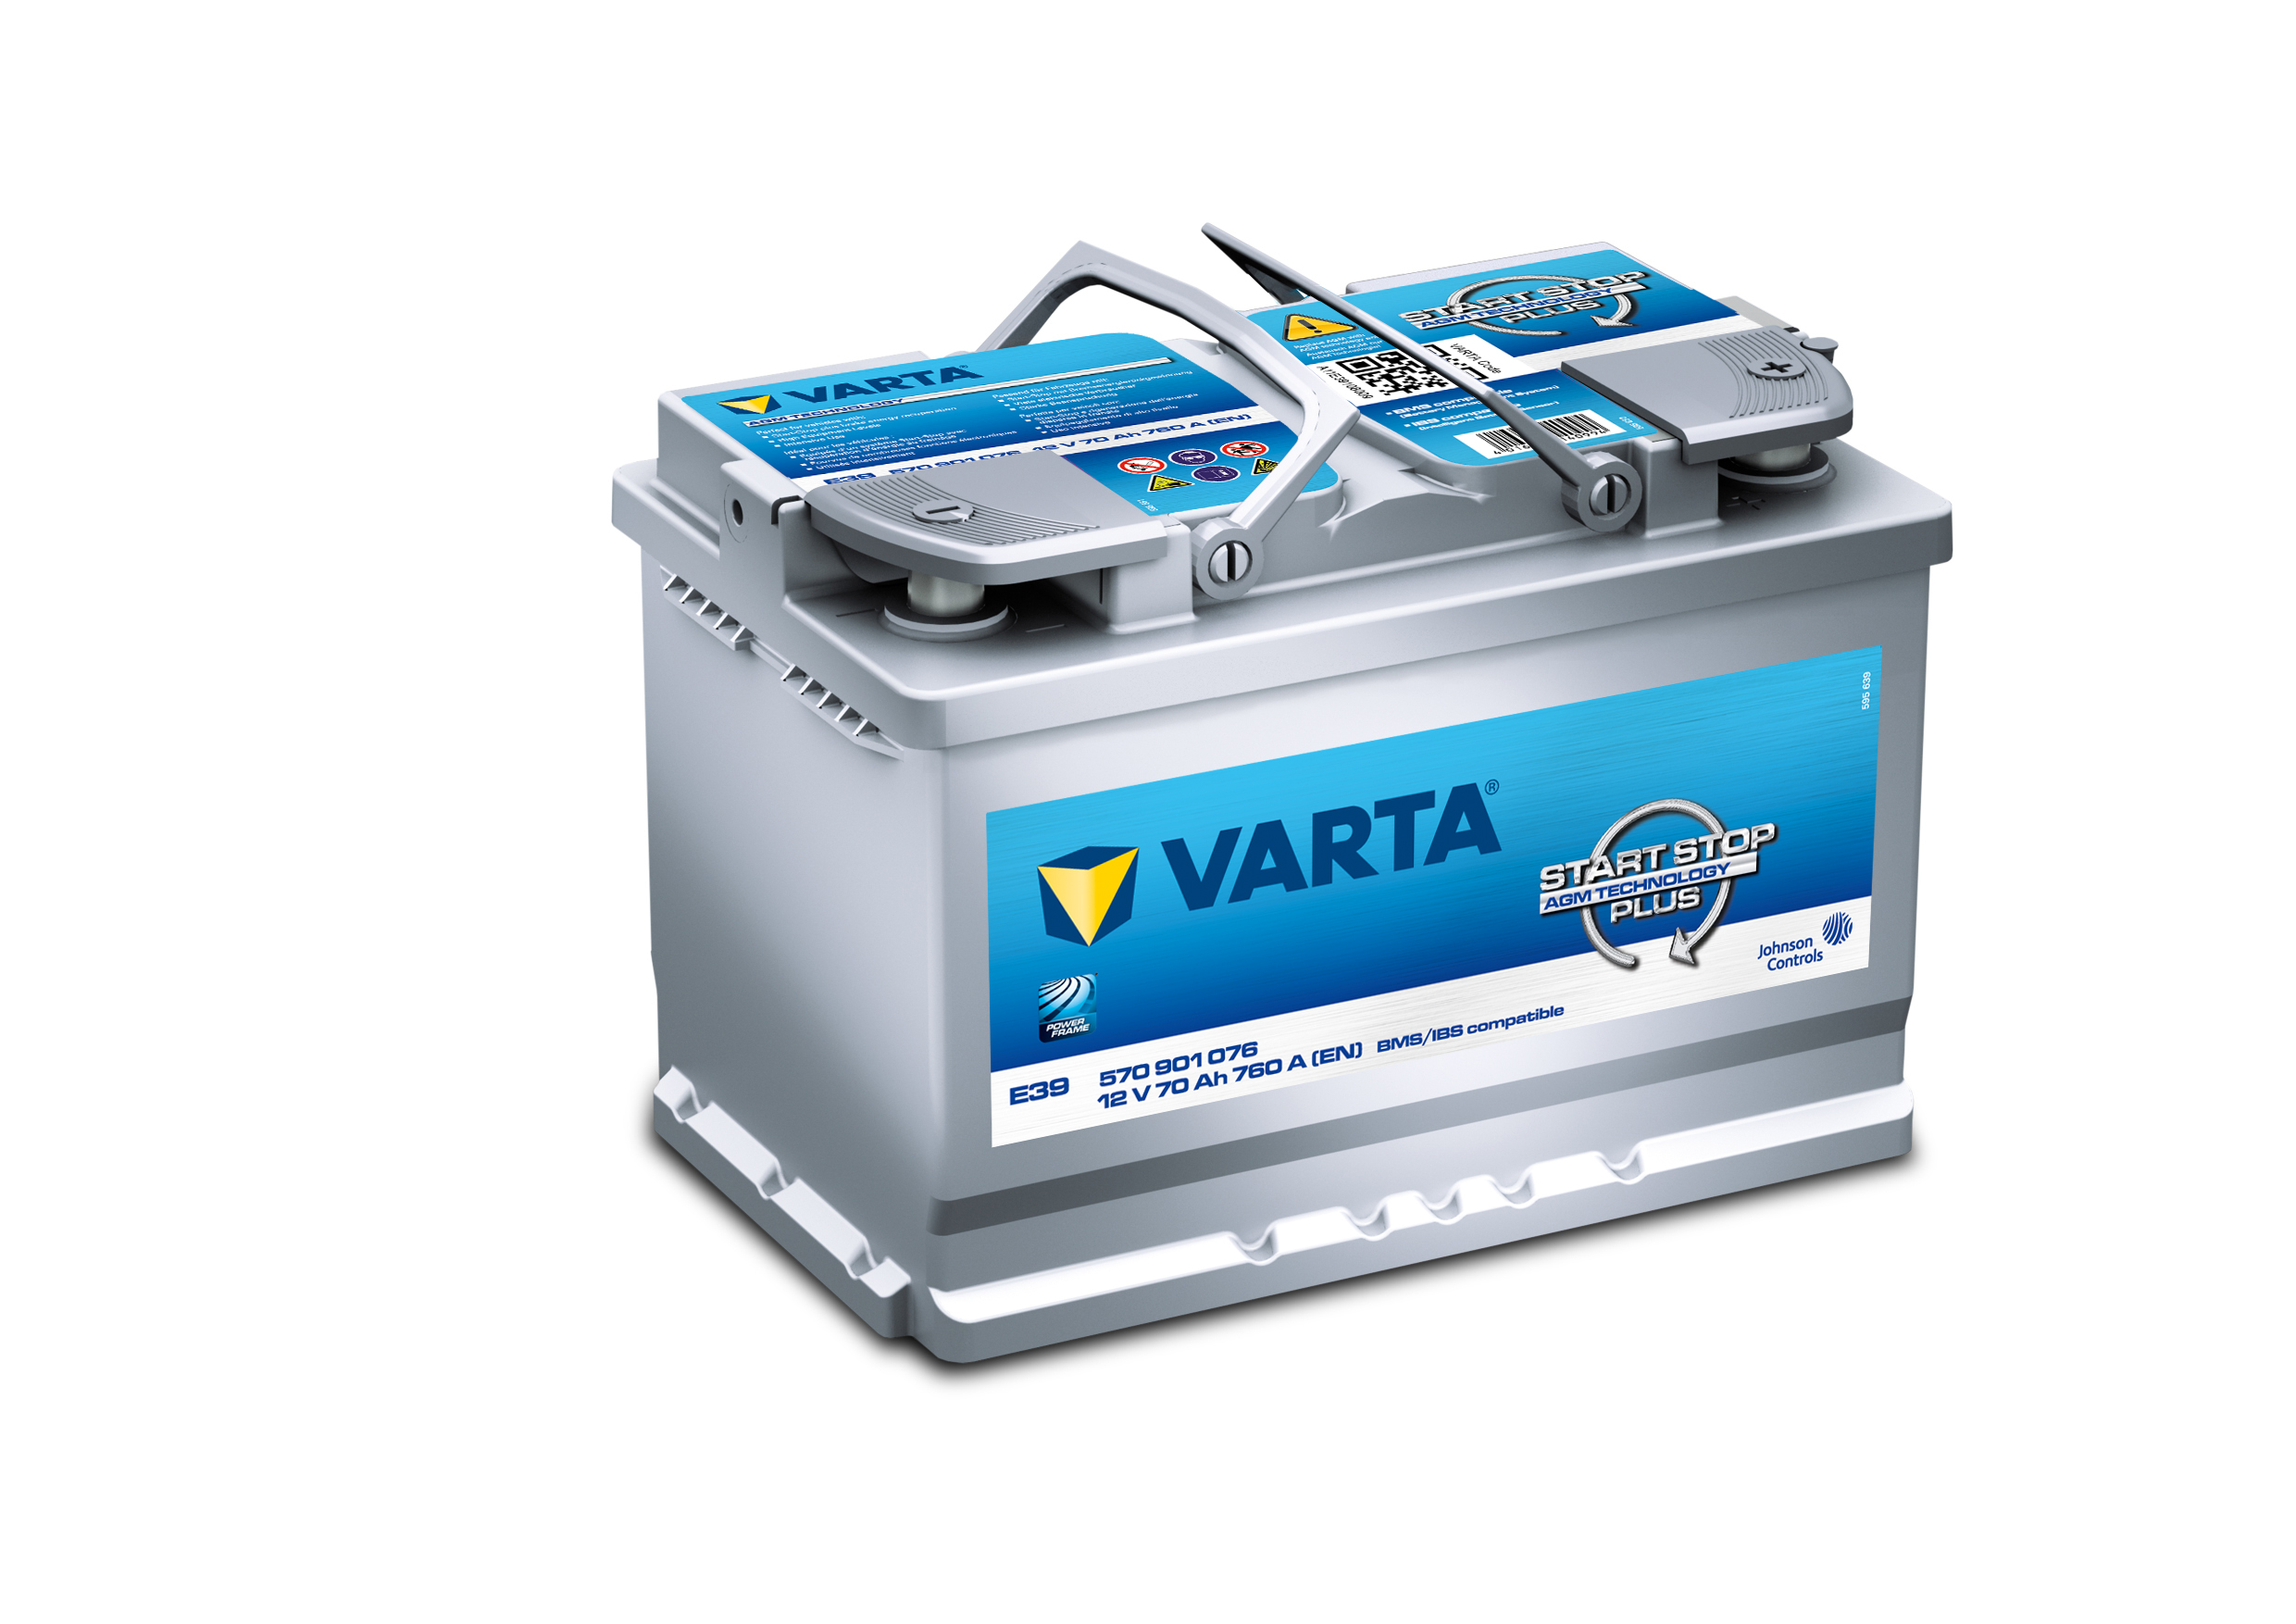 Varta Start-Stop Plus AGM batteri E39 12 V 70 Ah CCA 760 A (EN) - VoltPower